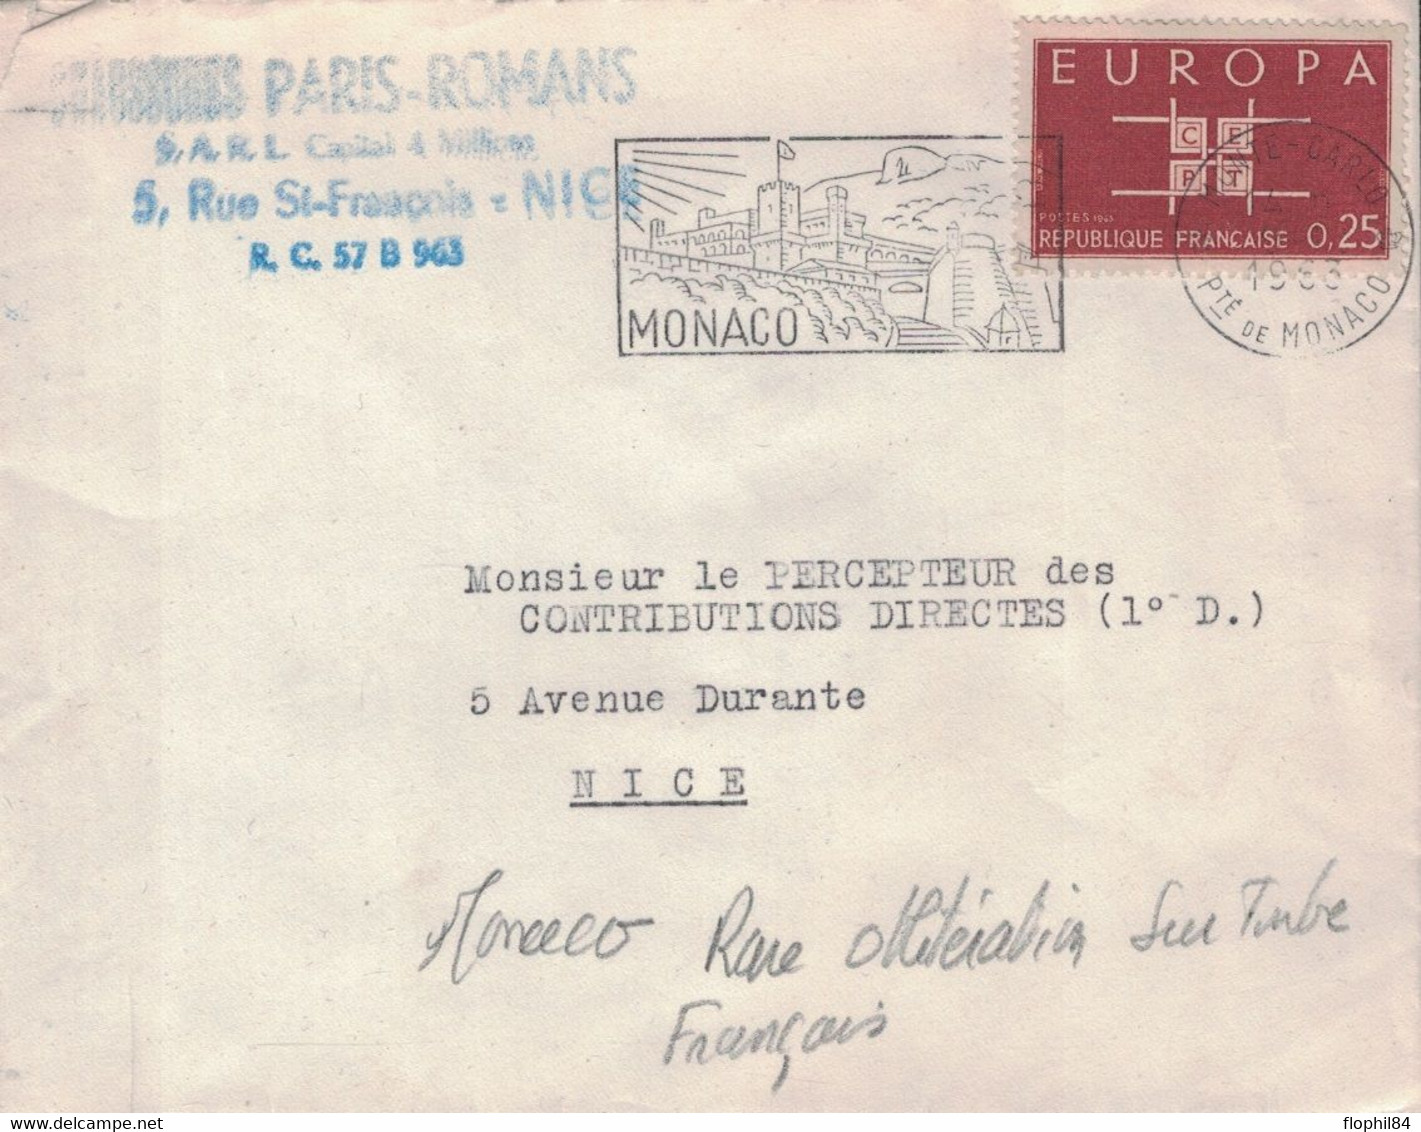 MONACO - TIMBRE DE FRANCE EUROPA 0.25C - ANNULATION FLAMME DE MONACO - 14-2-1963 - PEU COURANT. - Storia Postale